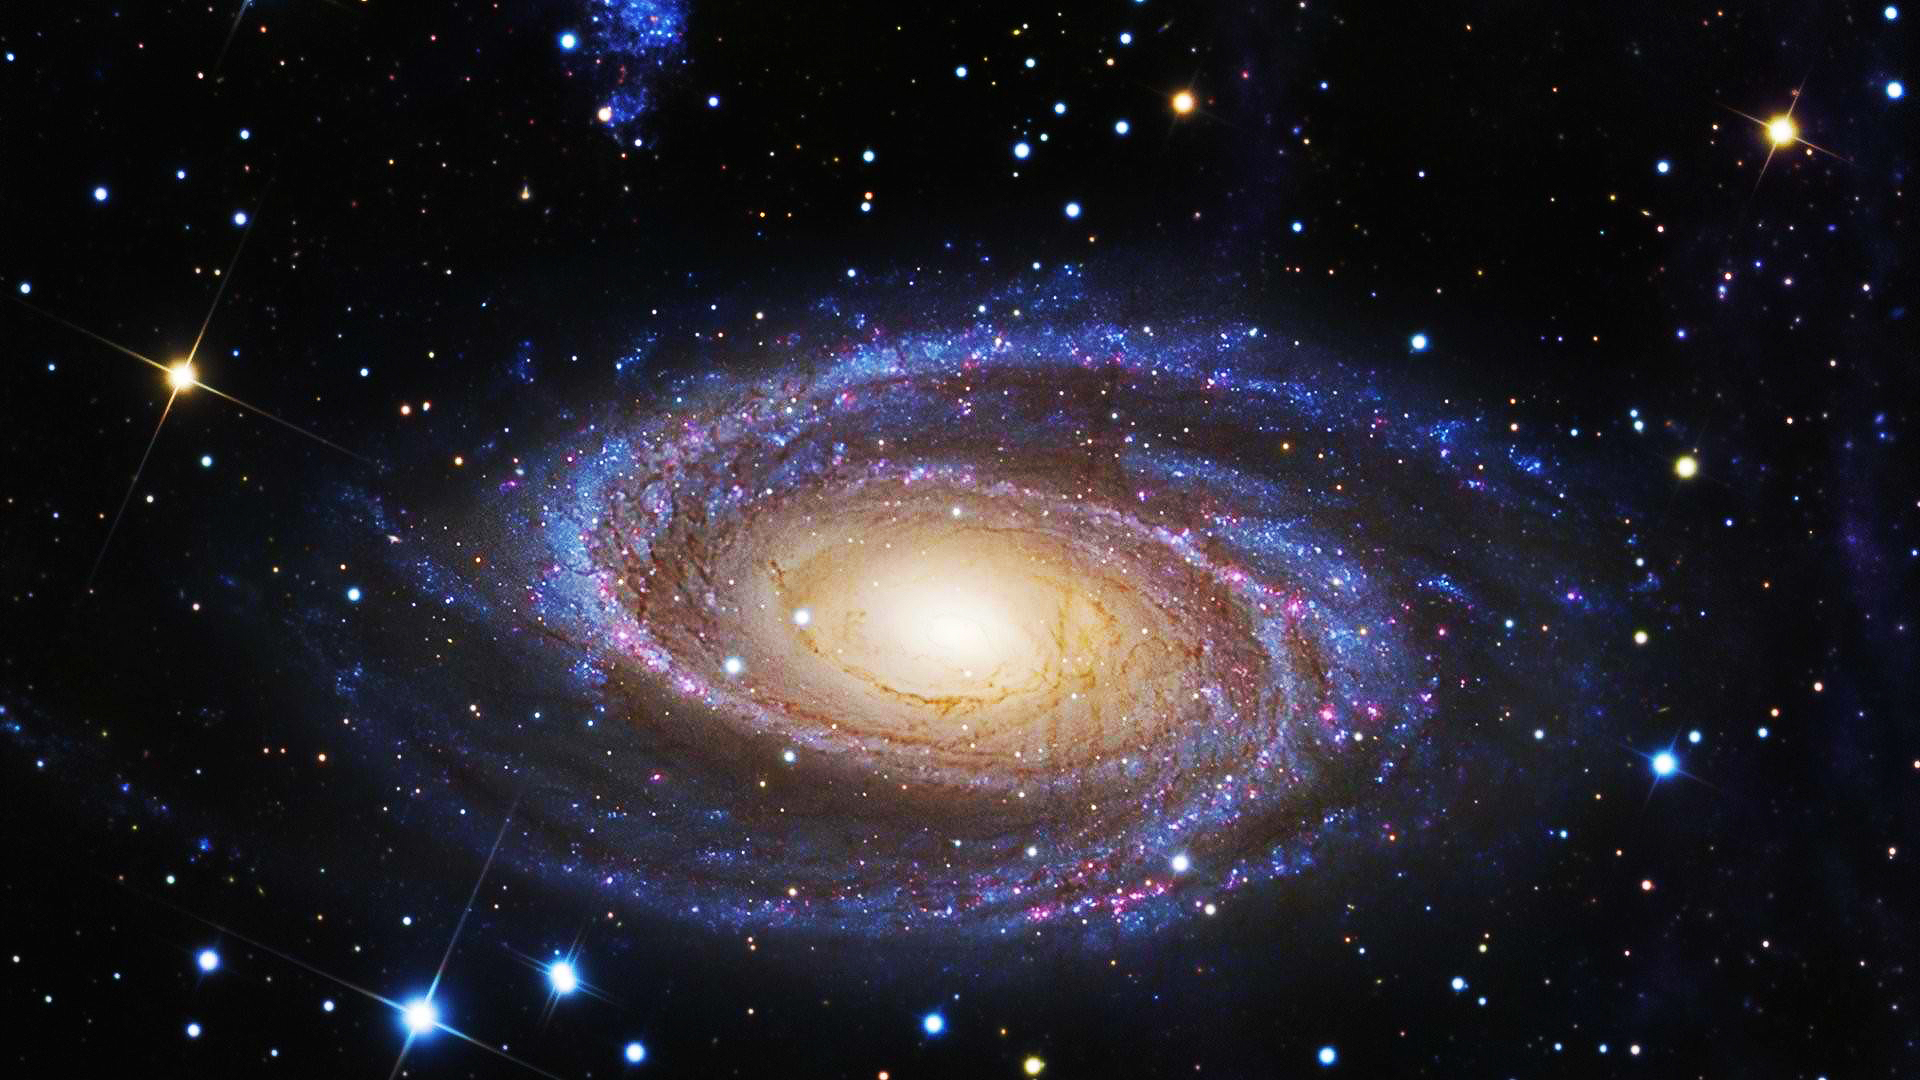 Tony_Ward_Studio_outer-space-stars-galaxies-nasa-hubble-hd-wallpapers